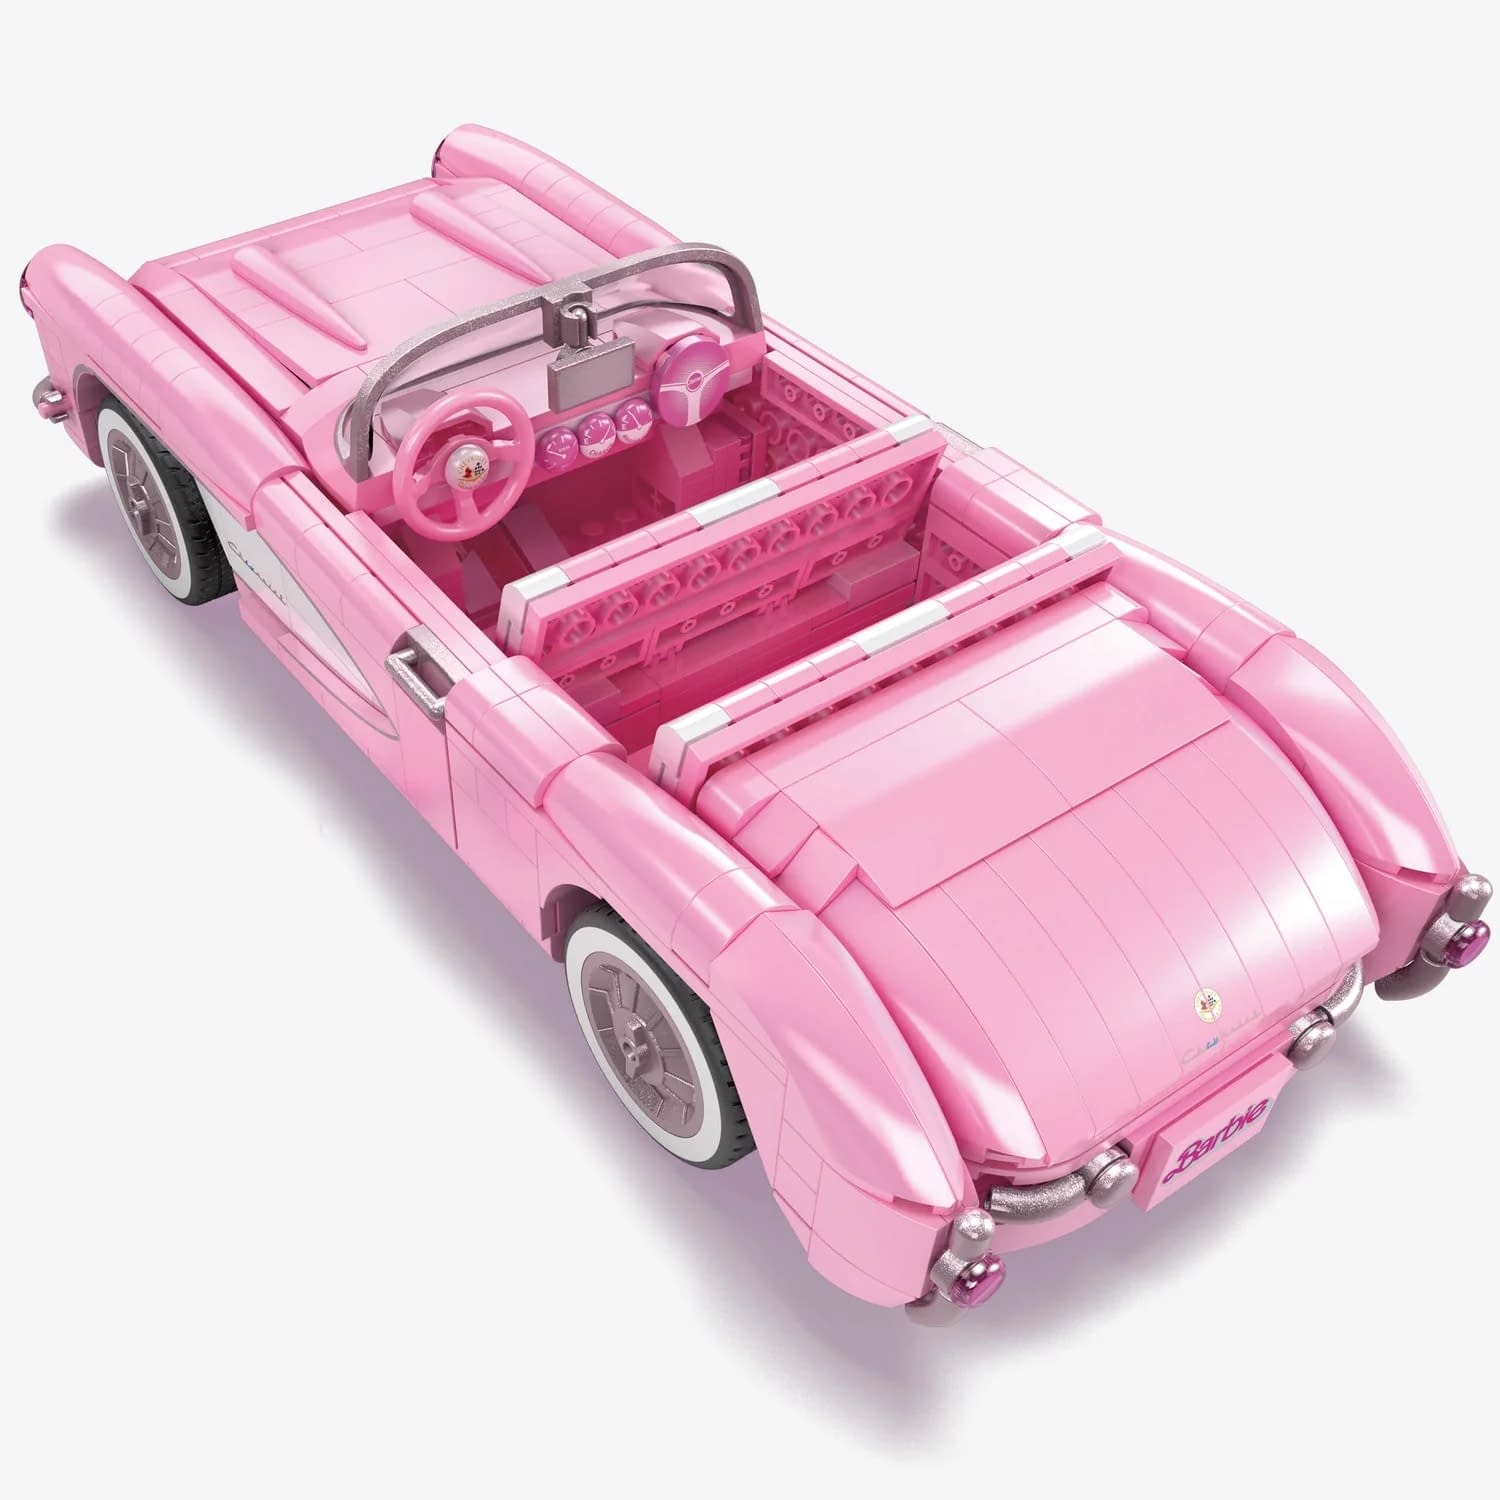 Mattel Drives in with MEGA Barbie The Movie '56 Corvette Stingray Set5